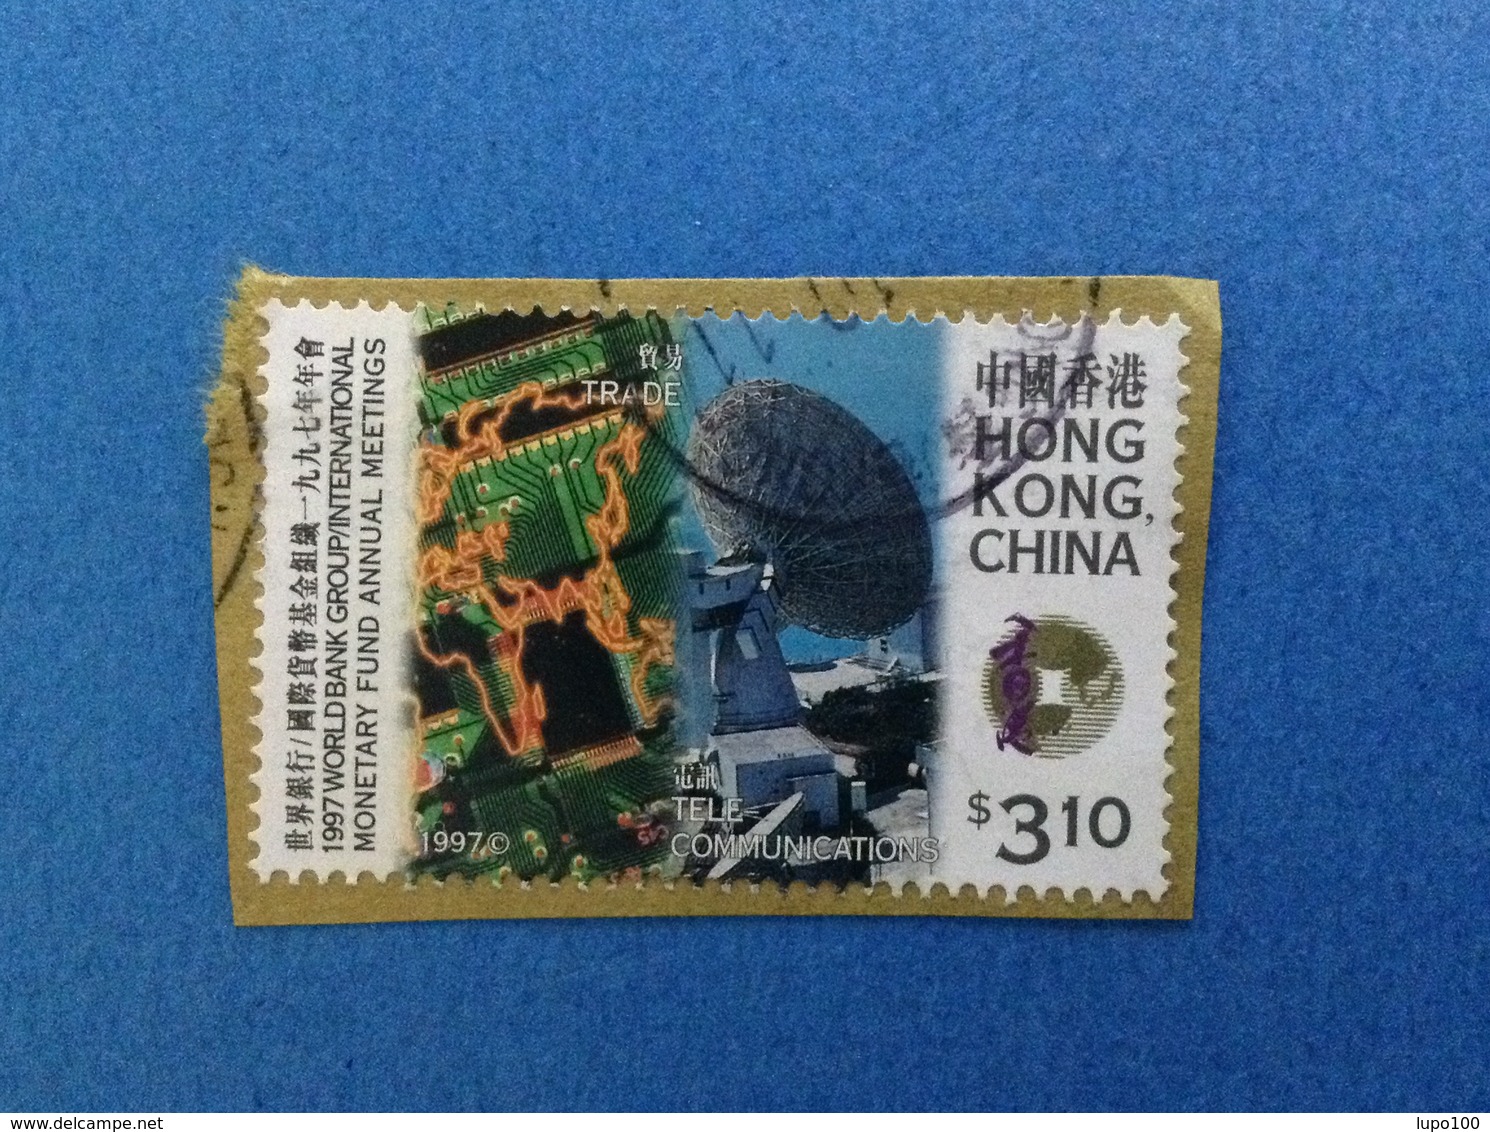 1997 HONG KONG CHINA FRANCOBOLLO USATO STAMP USED - TRADE TELECOMUNICATIONS $ 3.10 - Oblitérés